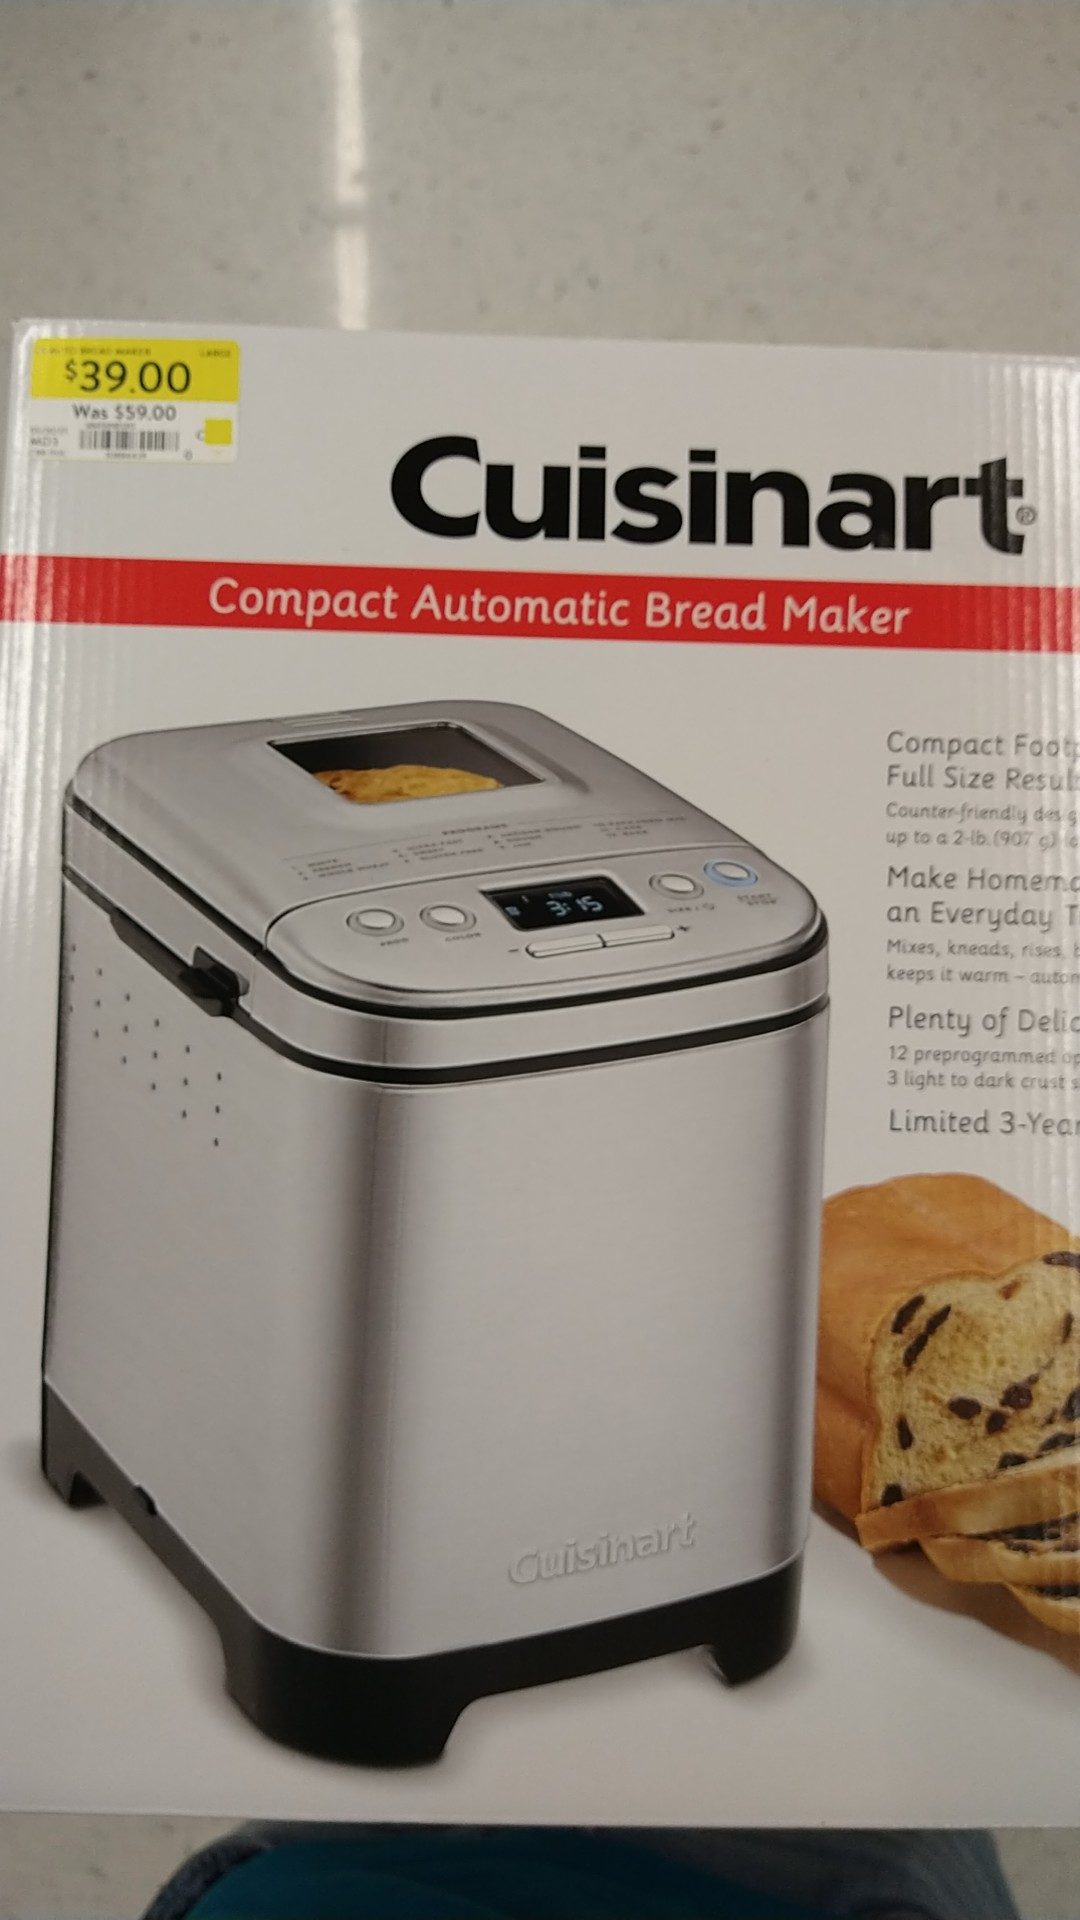 Cuisinart - Compact Automatic Bread Maker